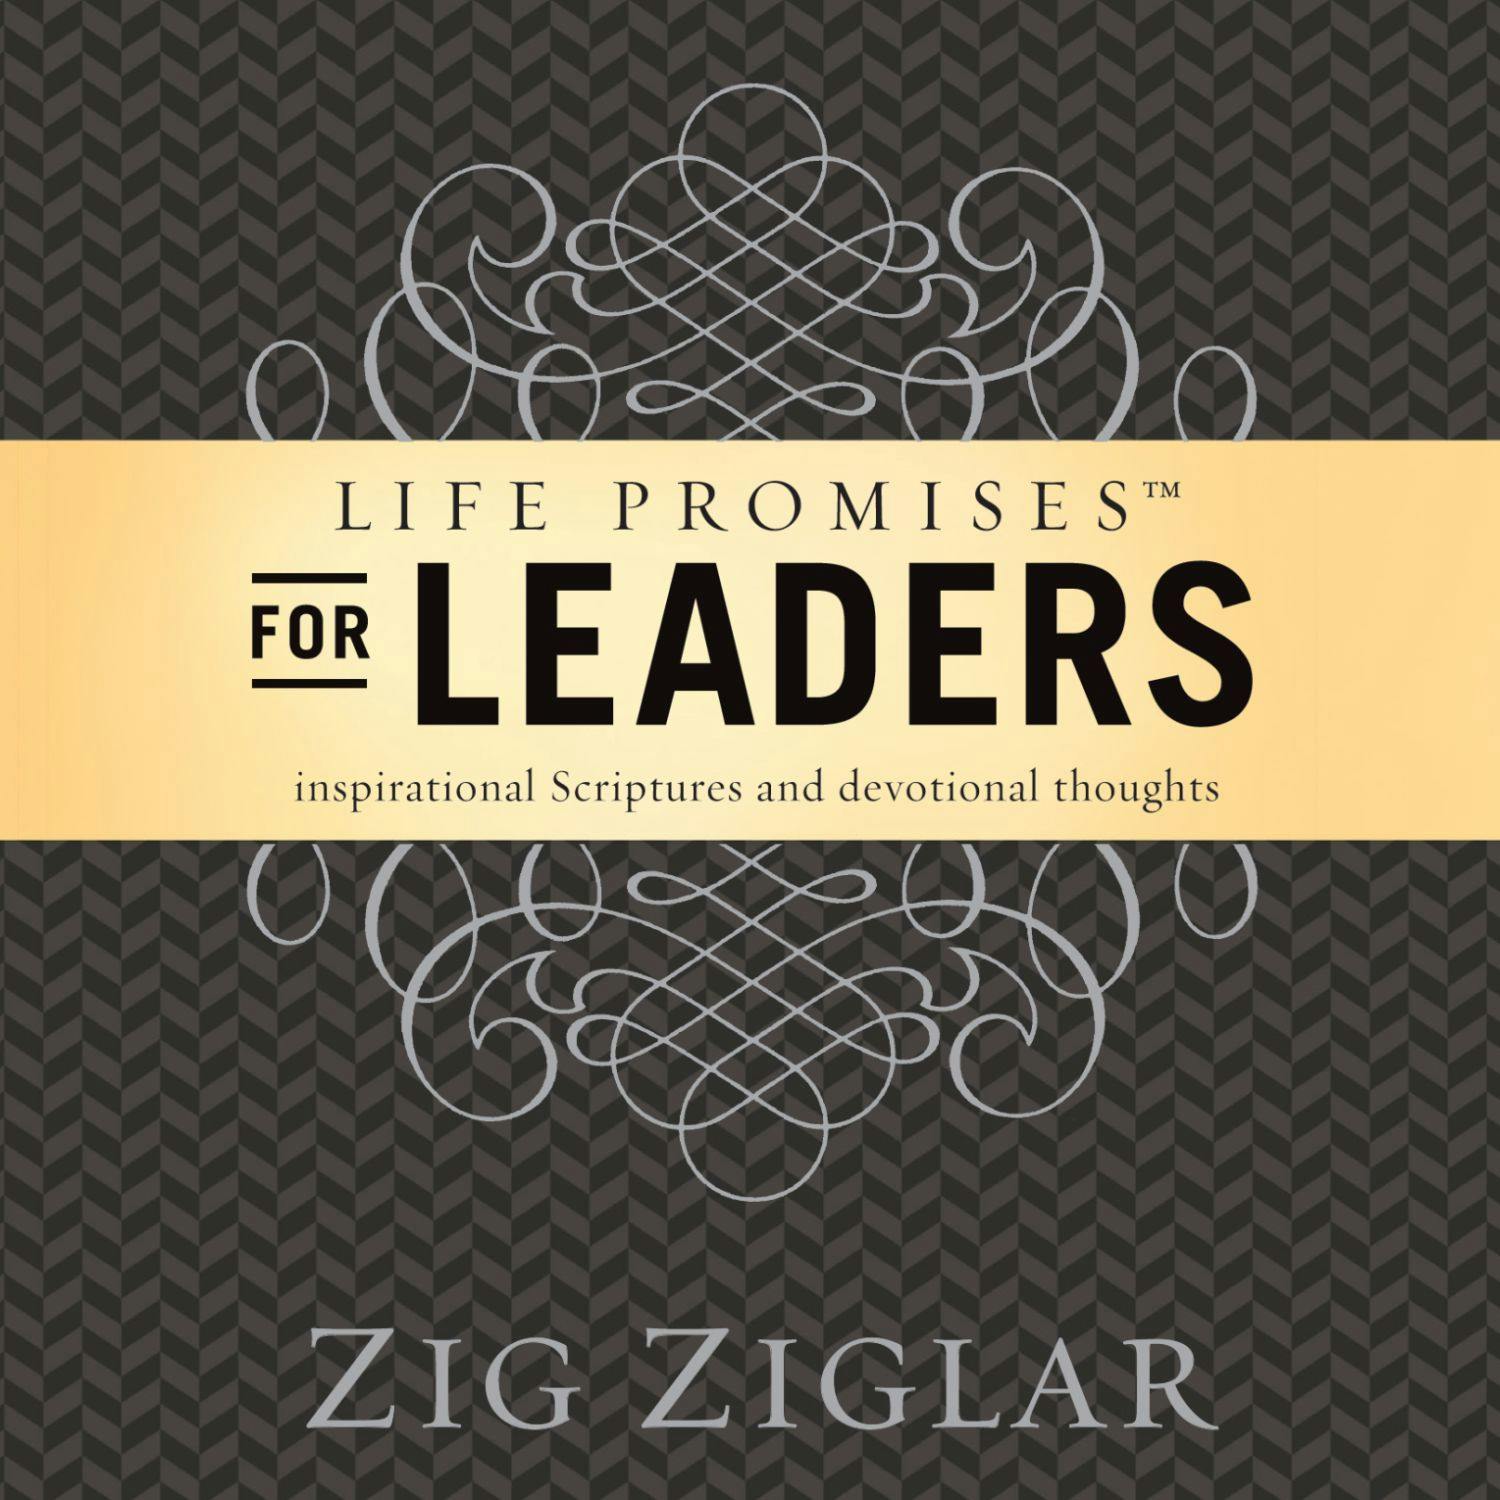 Life Promises for Leaders: Inspirational Scriptures and Devotional Thoughts - Zig Ziglar